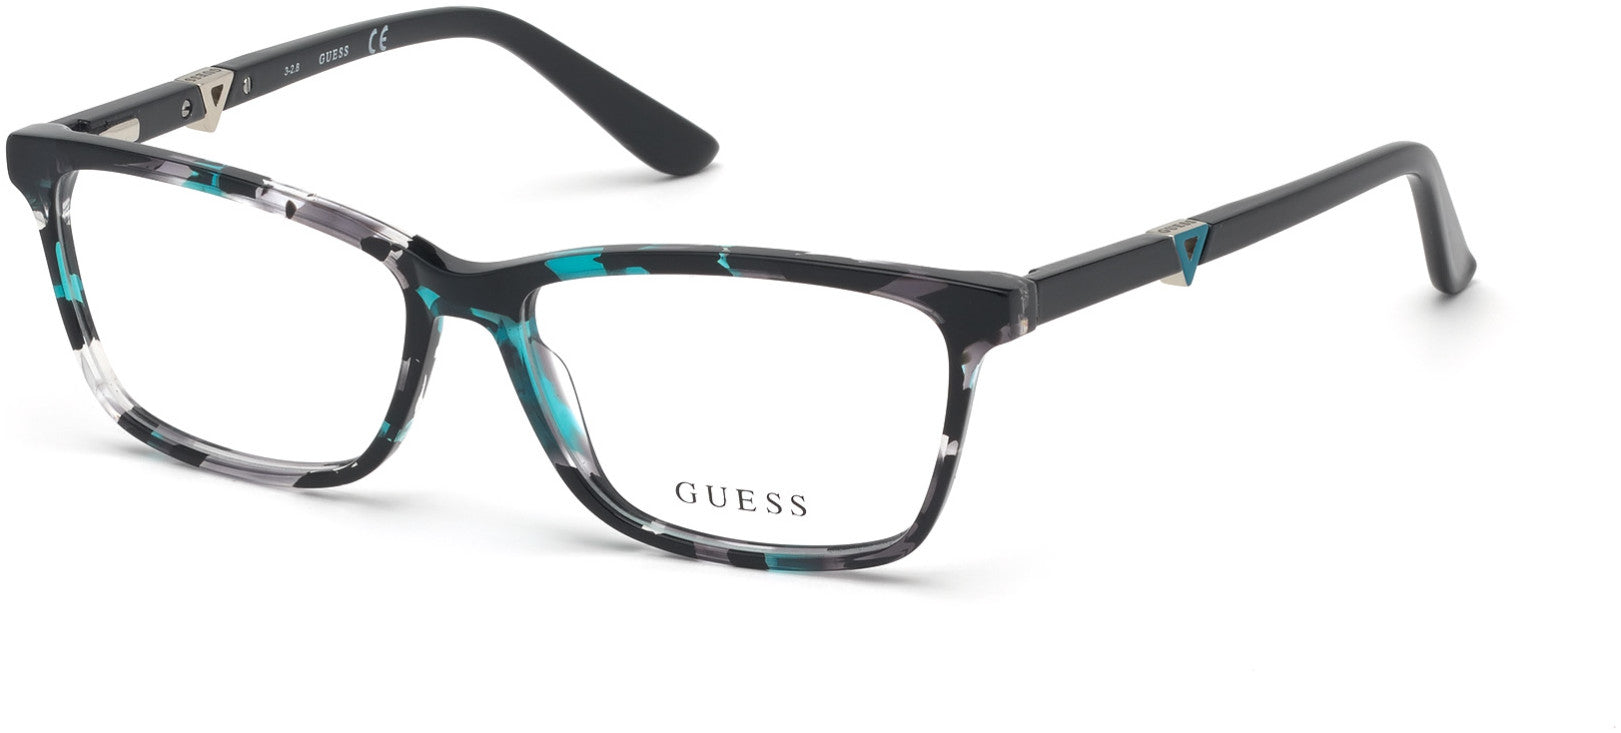 Guess GU2731 Geometric Eyeglasses 089-089 - Turquoise